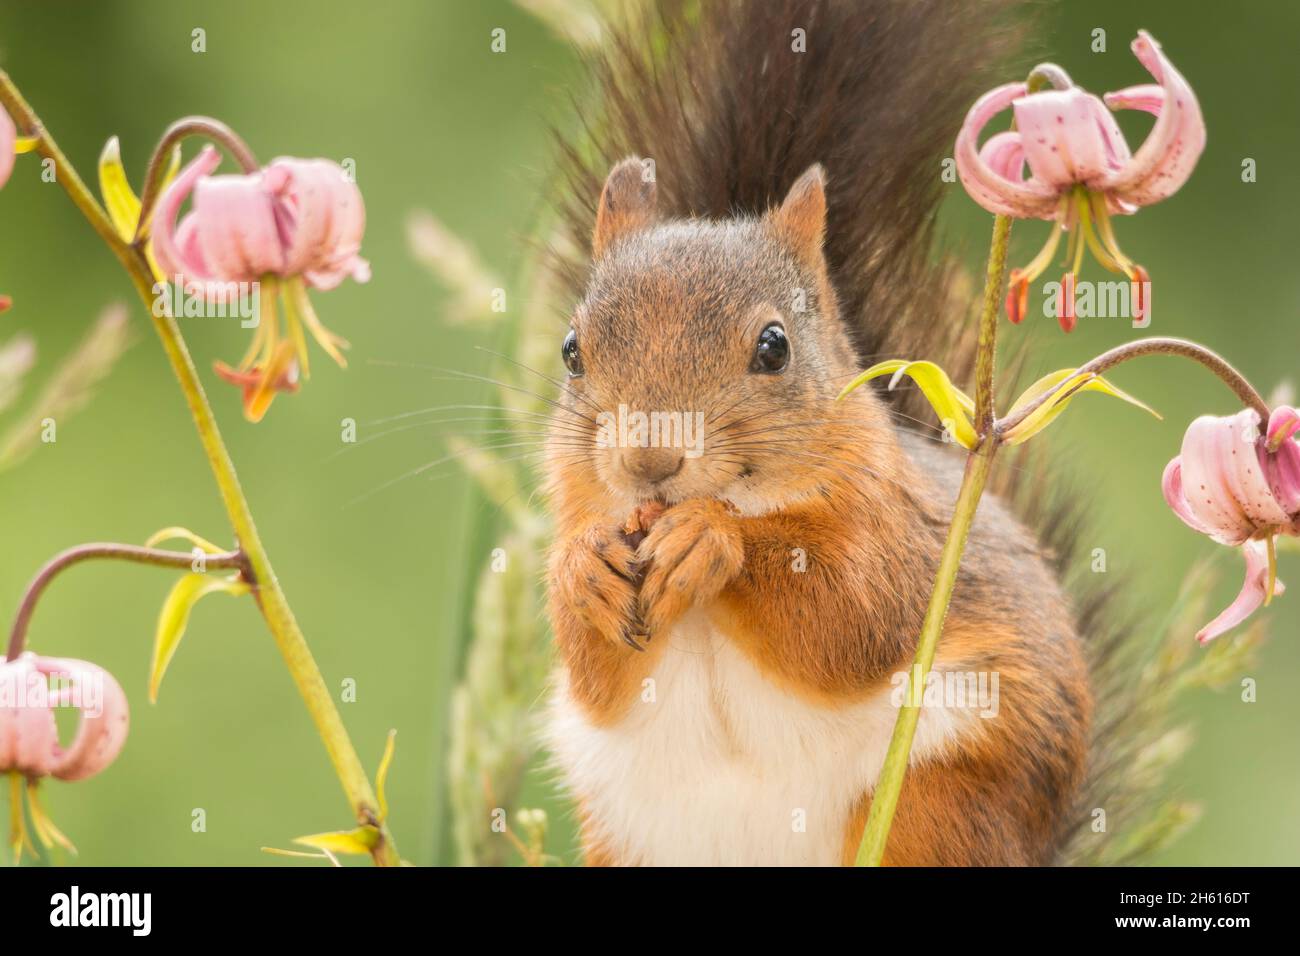 red squirrel standing hanging between flowers Stock Photo